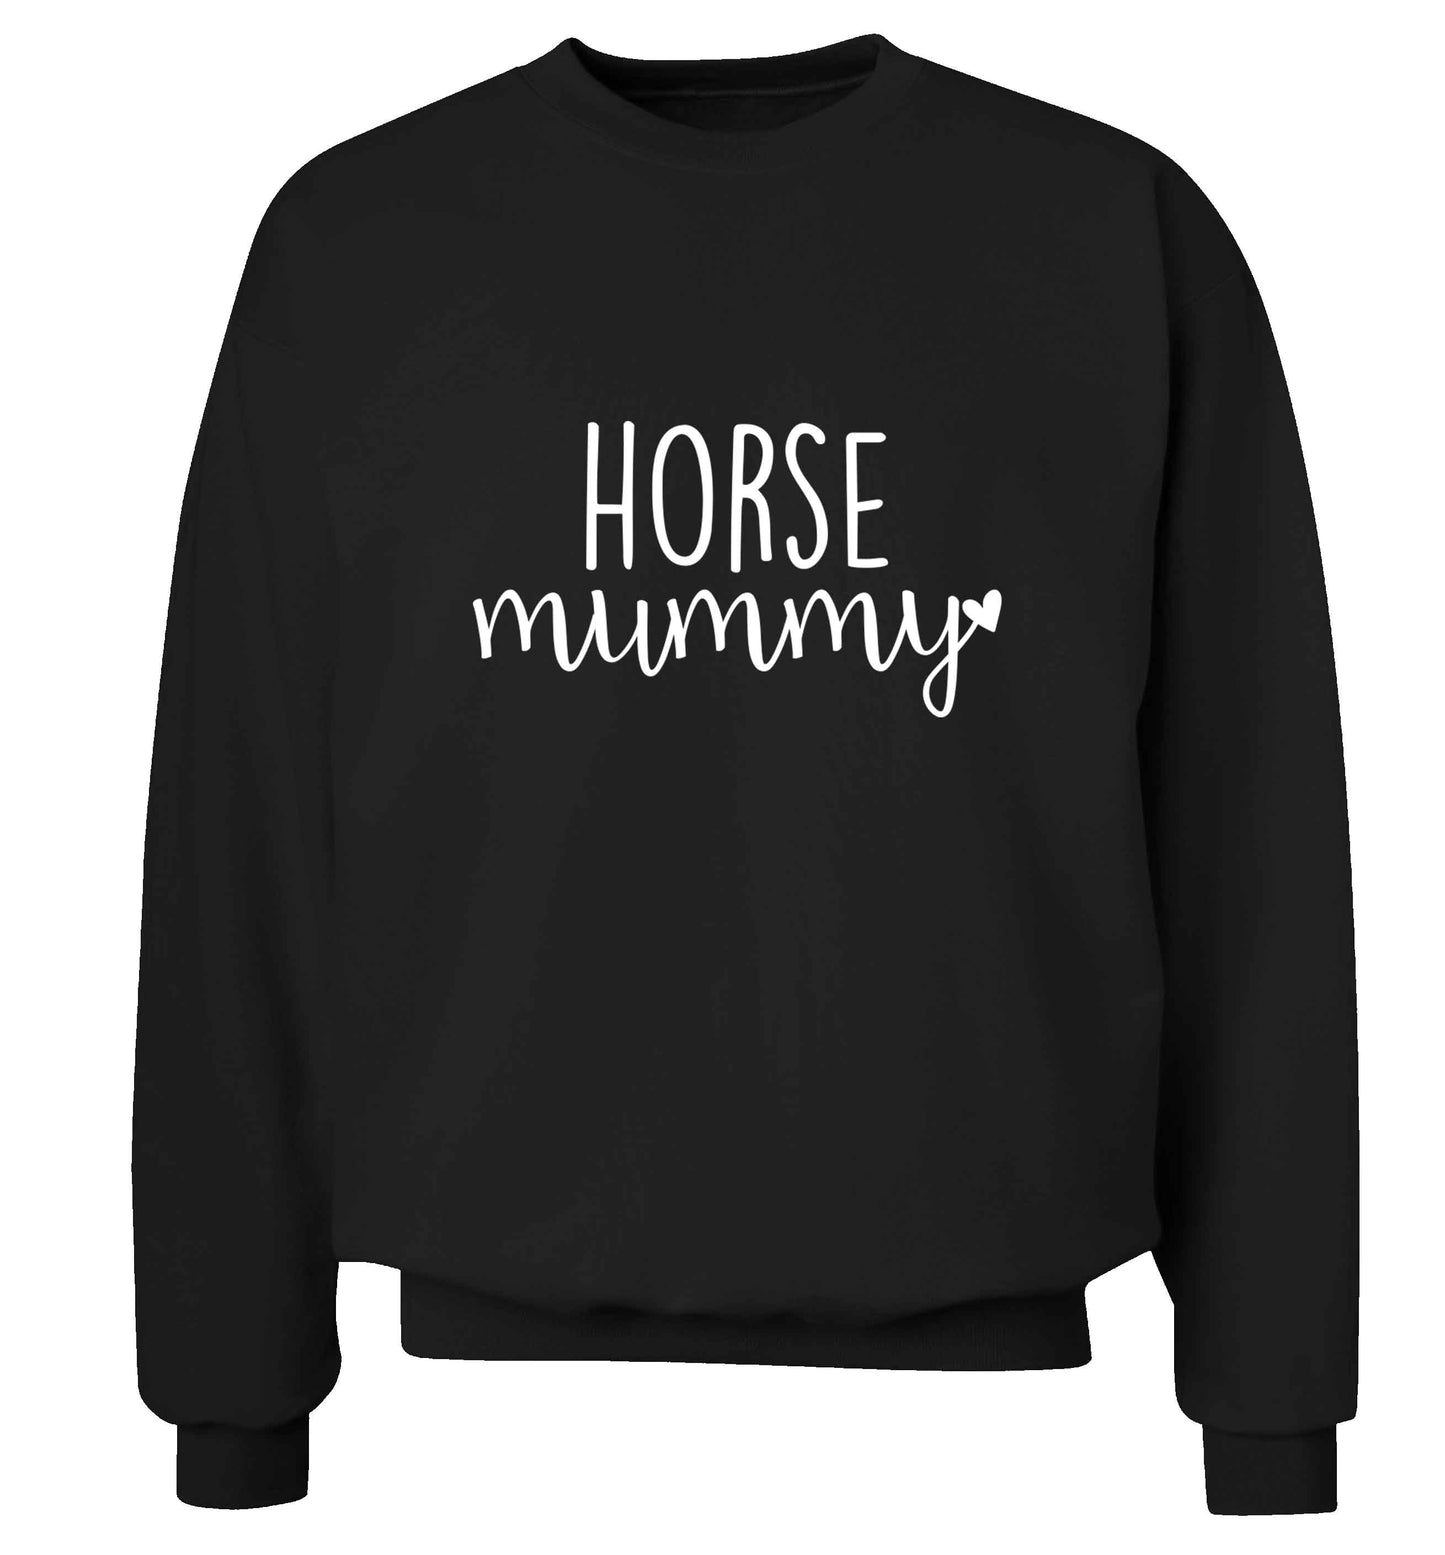 Horse mummy adult's unisex black sweater 2XL